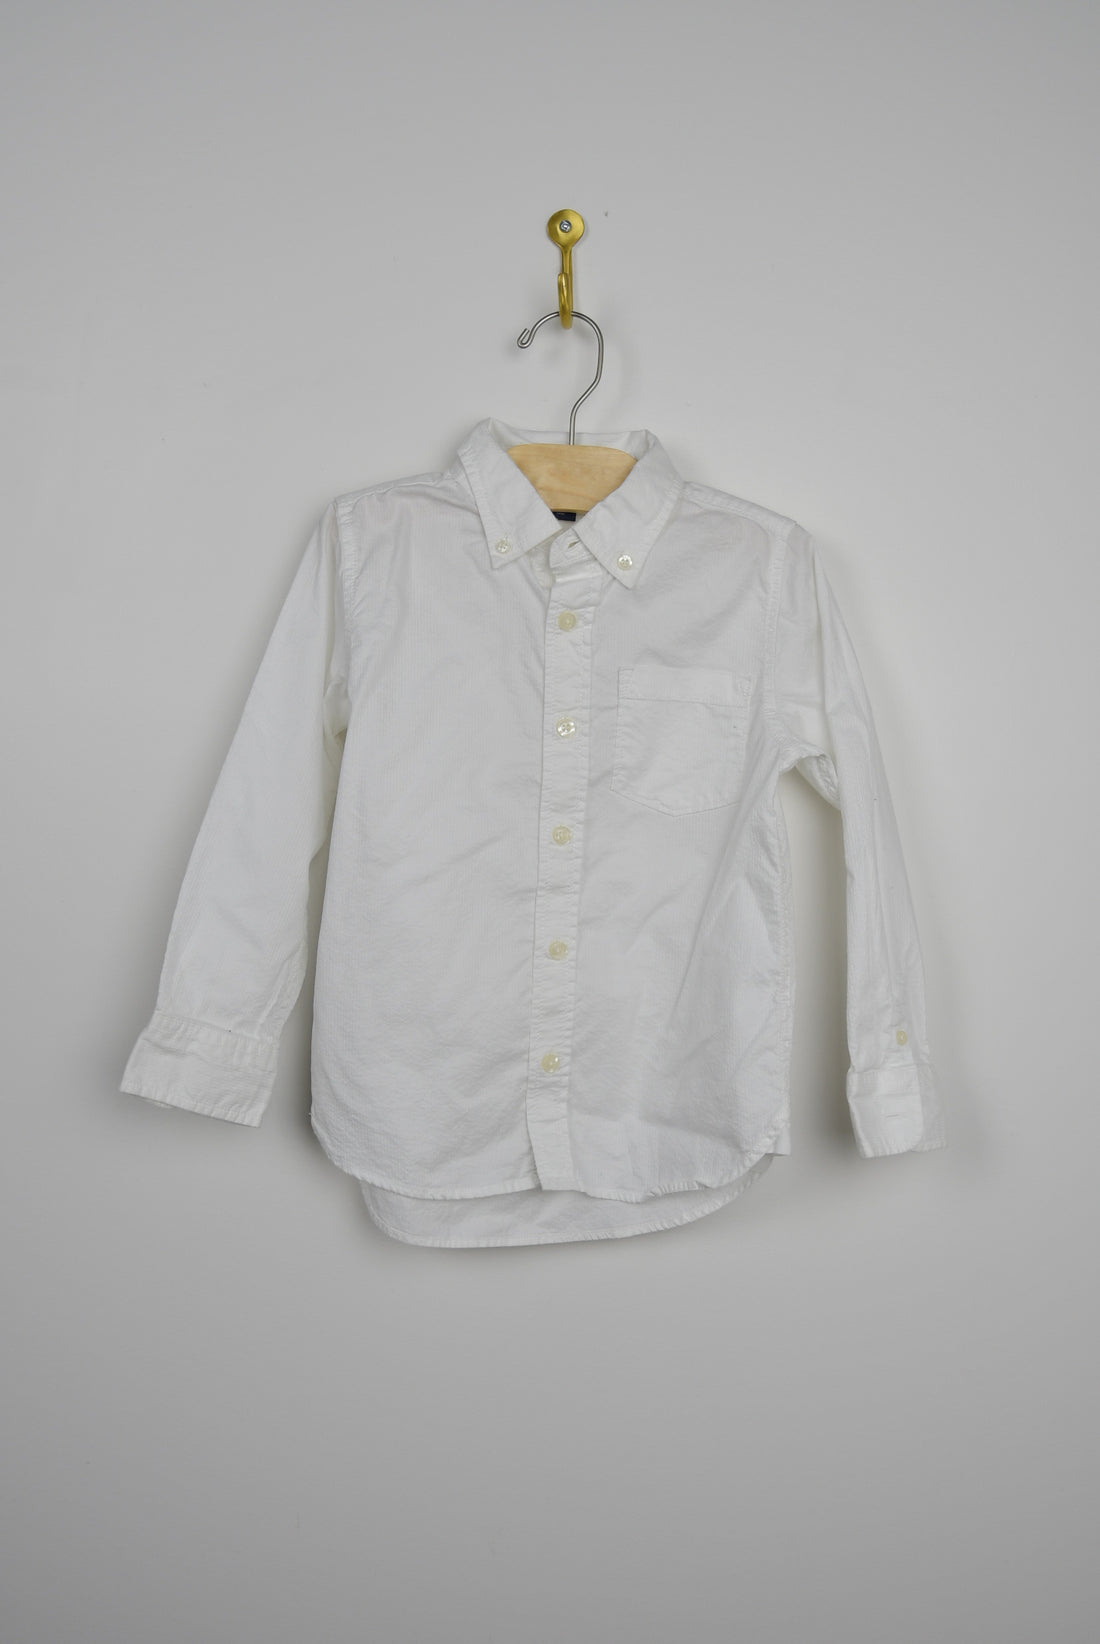 Hux Baby Gap White Dress Shirt - 5T